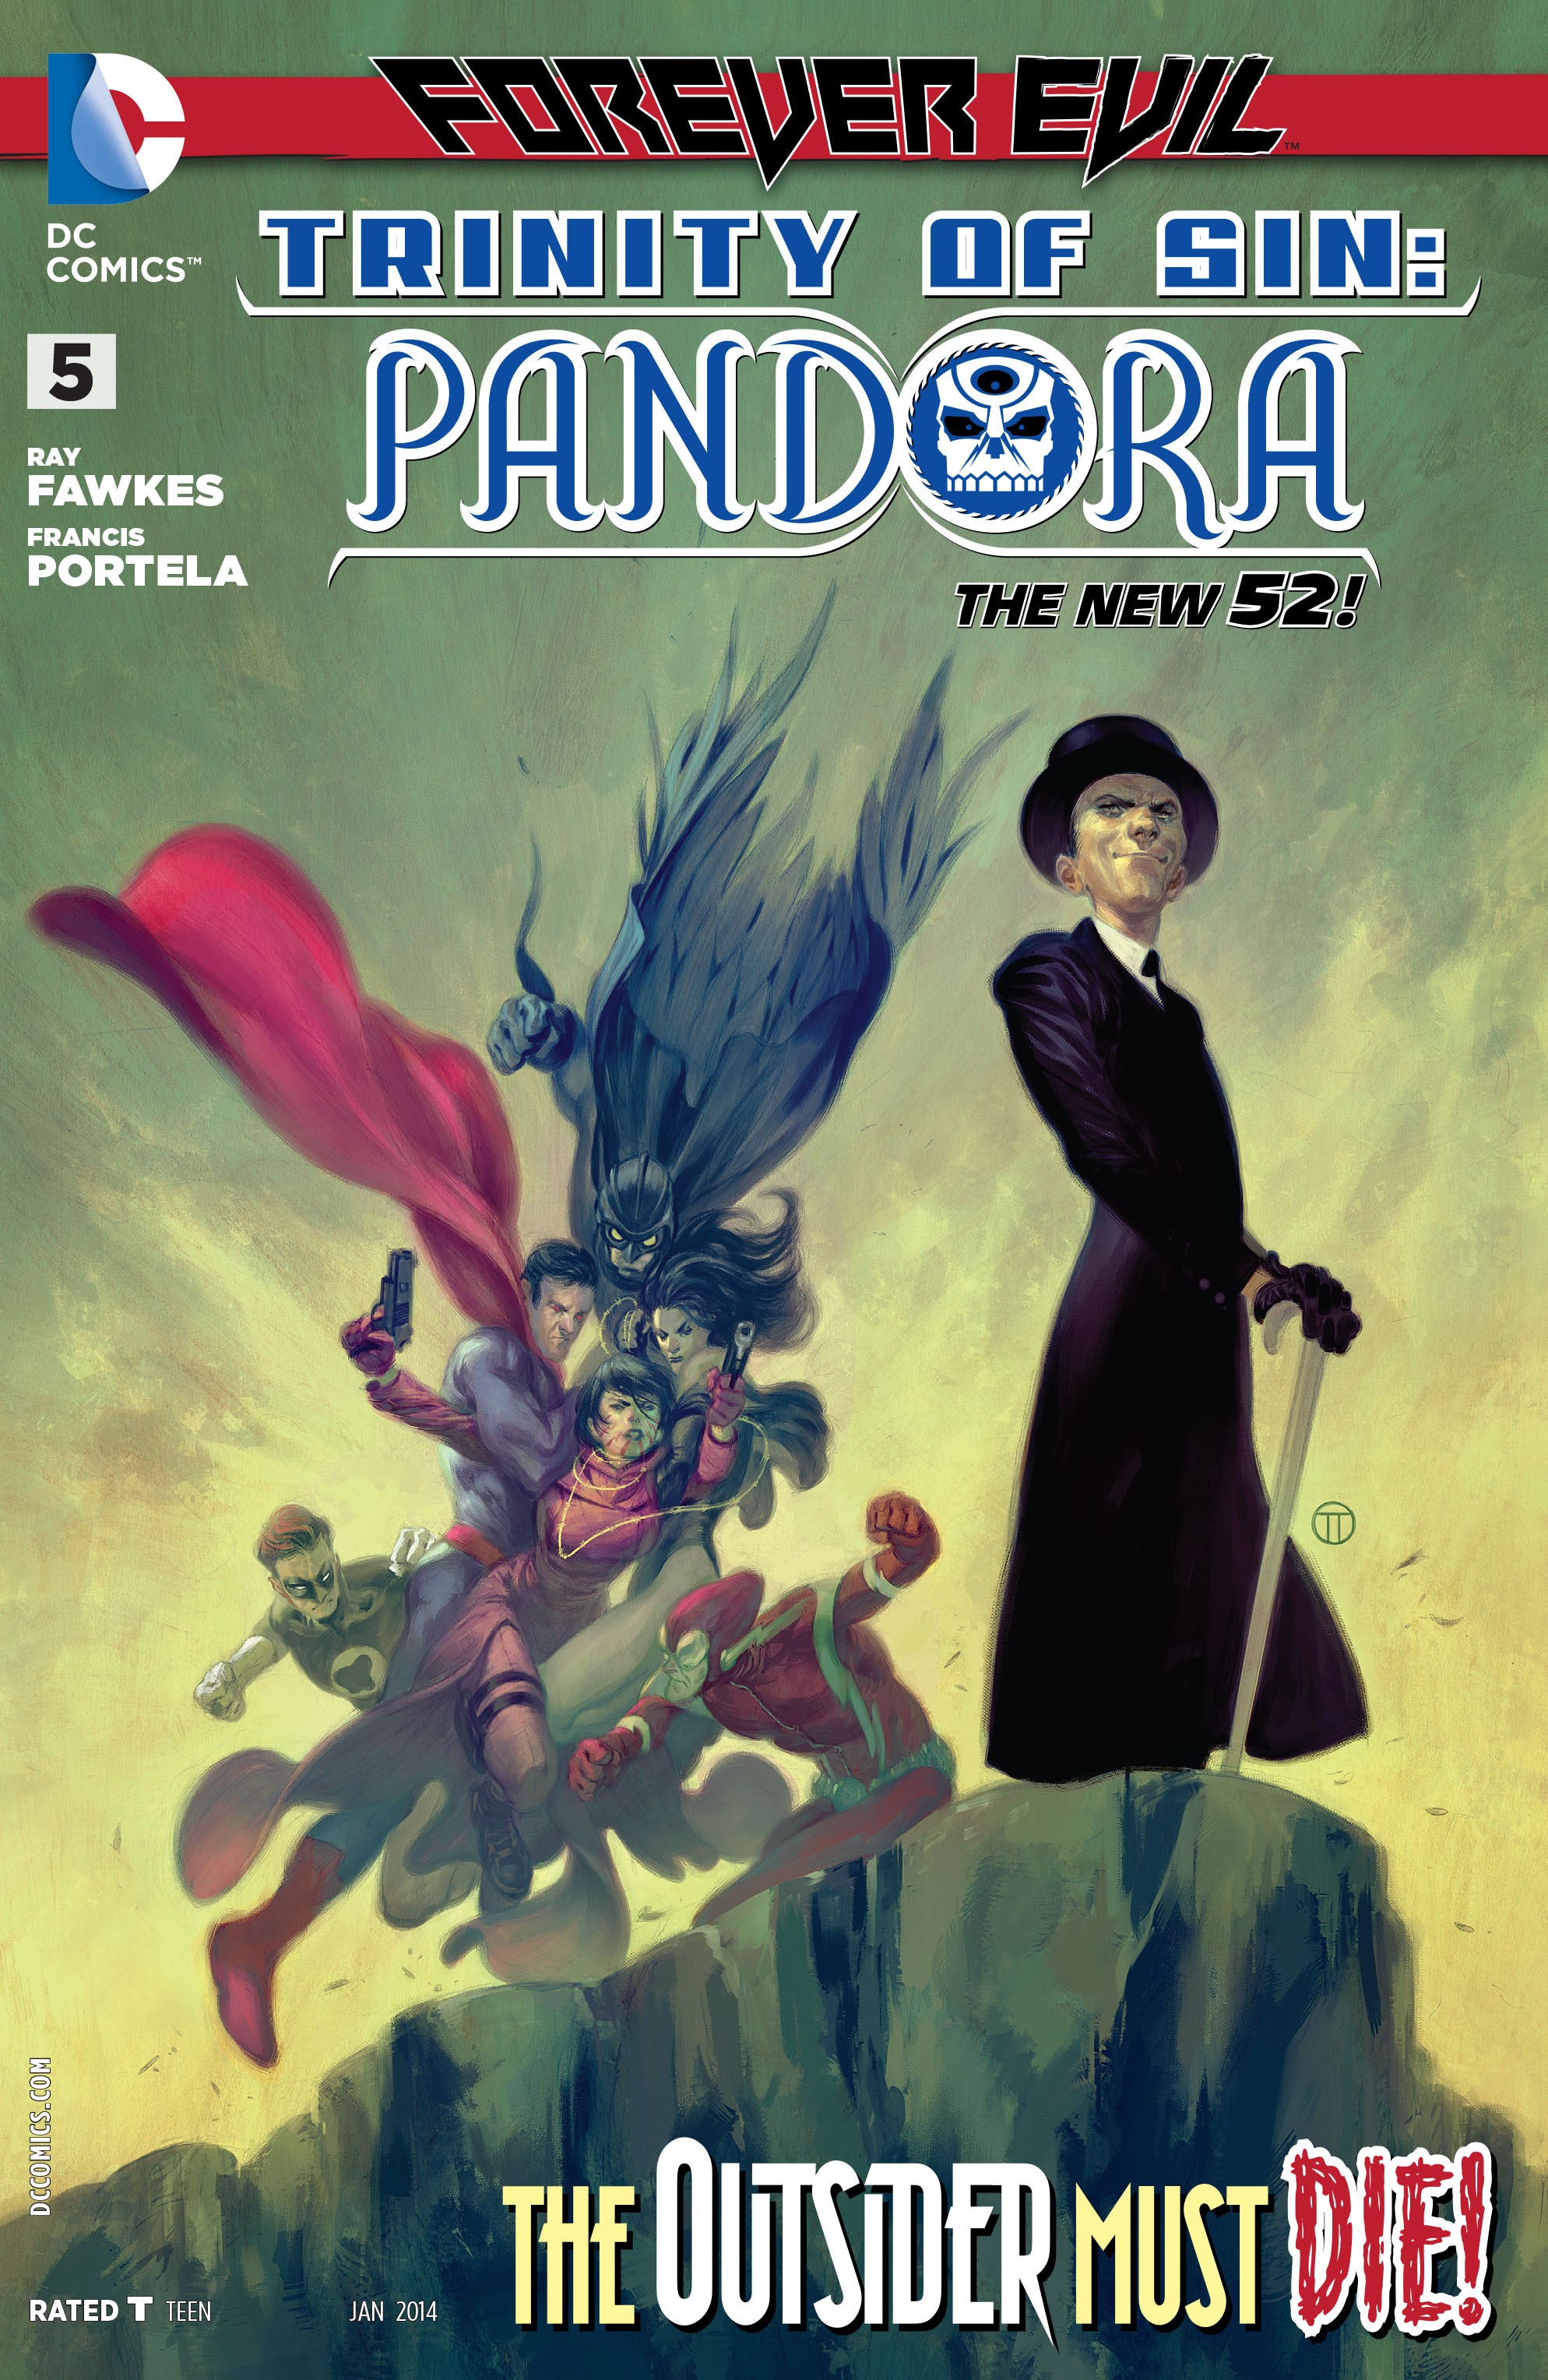 Trinity of Sin: Pandora Vol. 1 #5